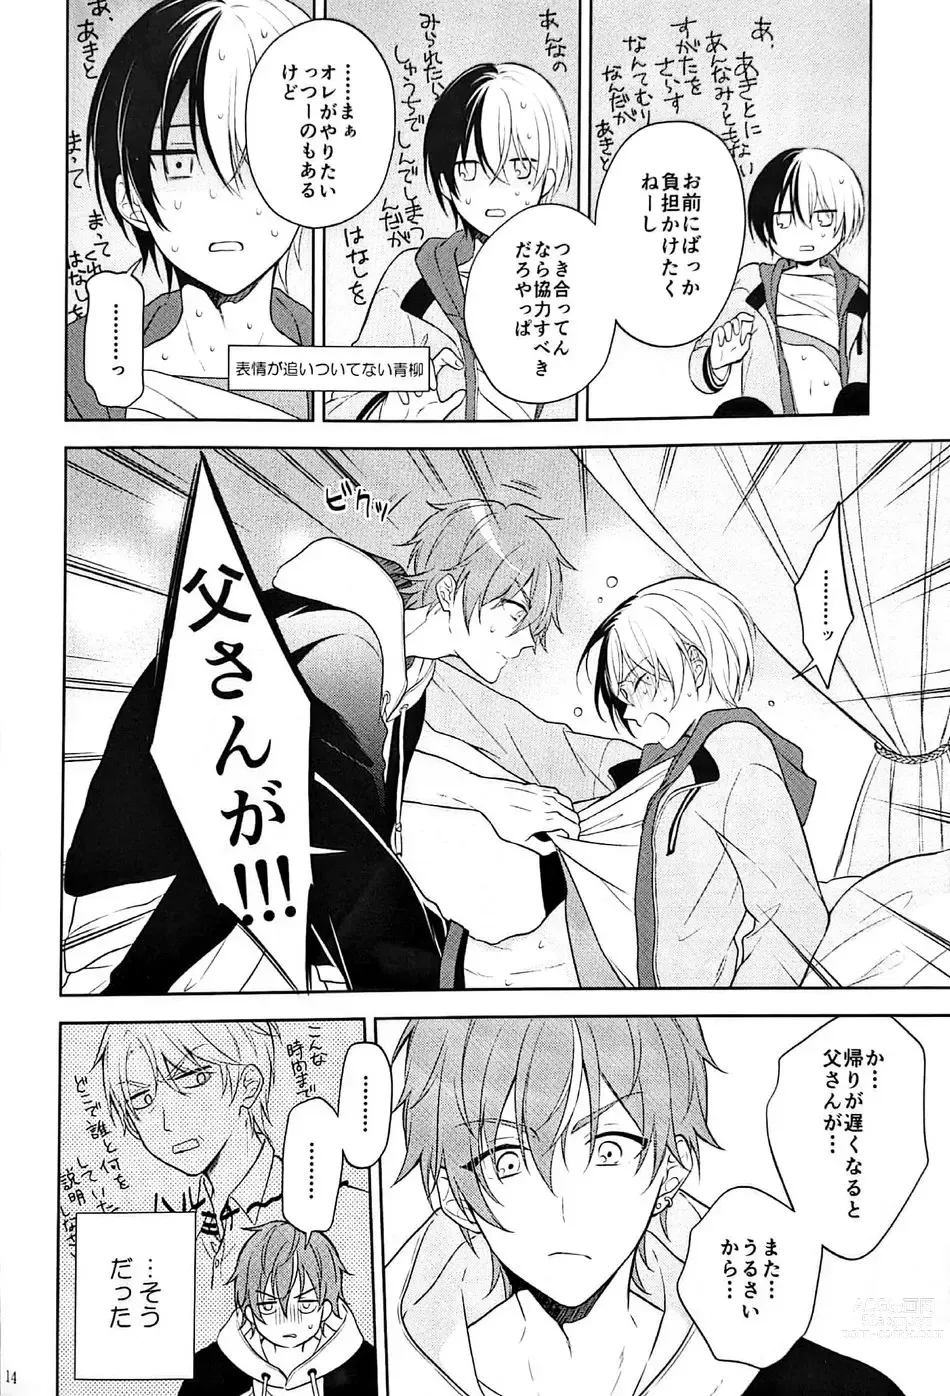 Page 15 of doujinshi RETRY